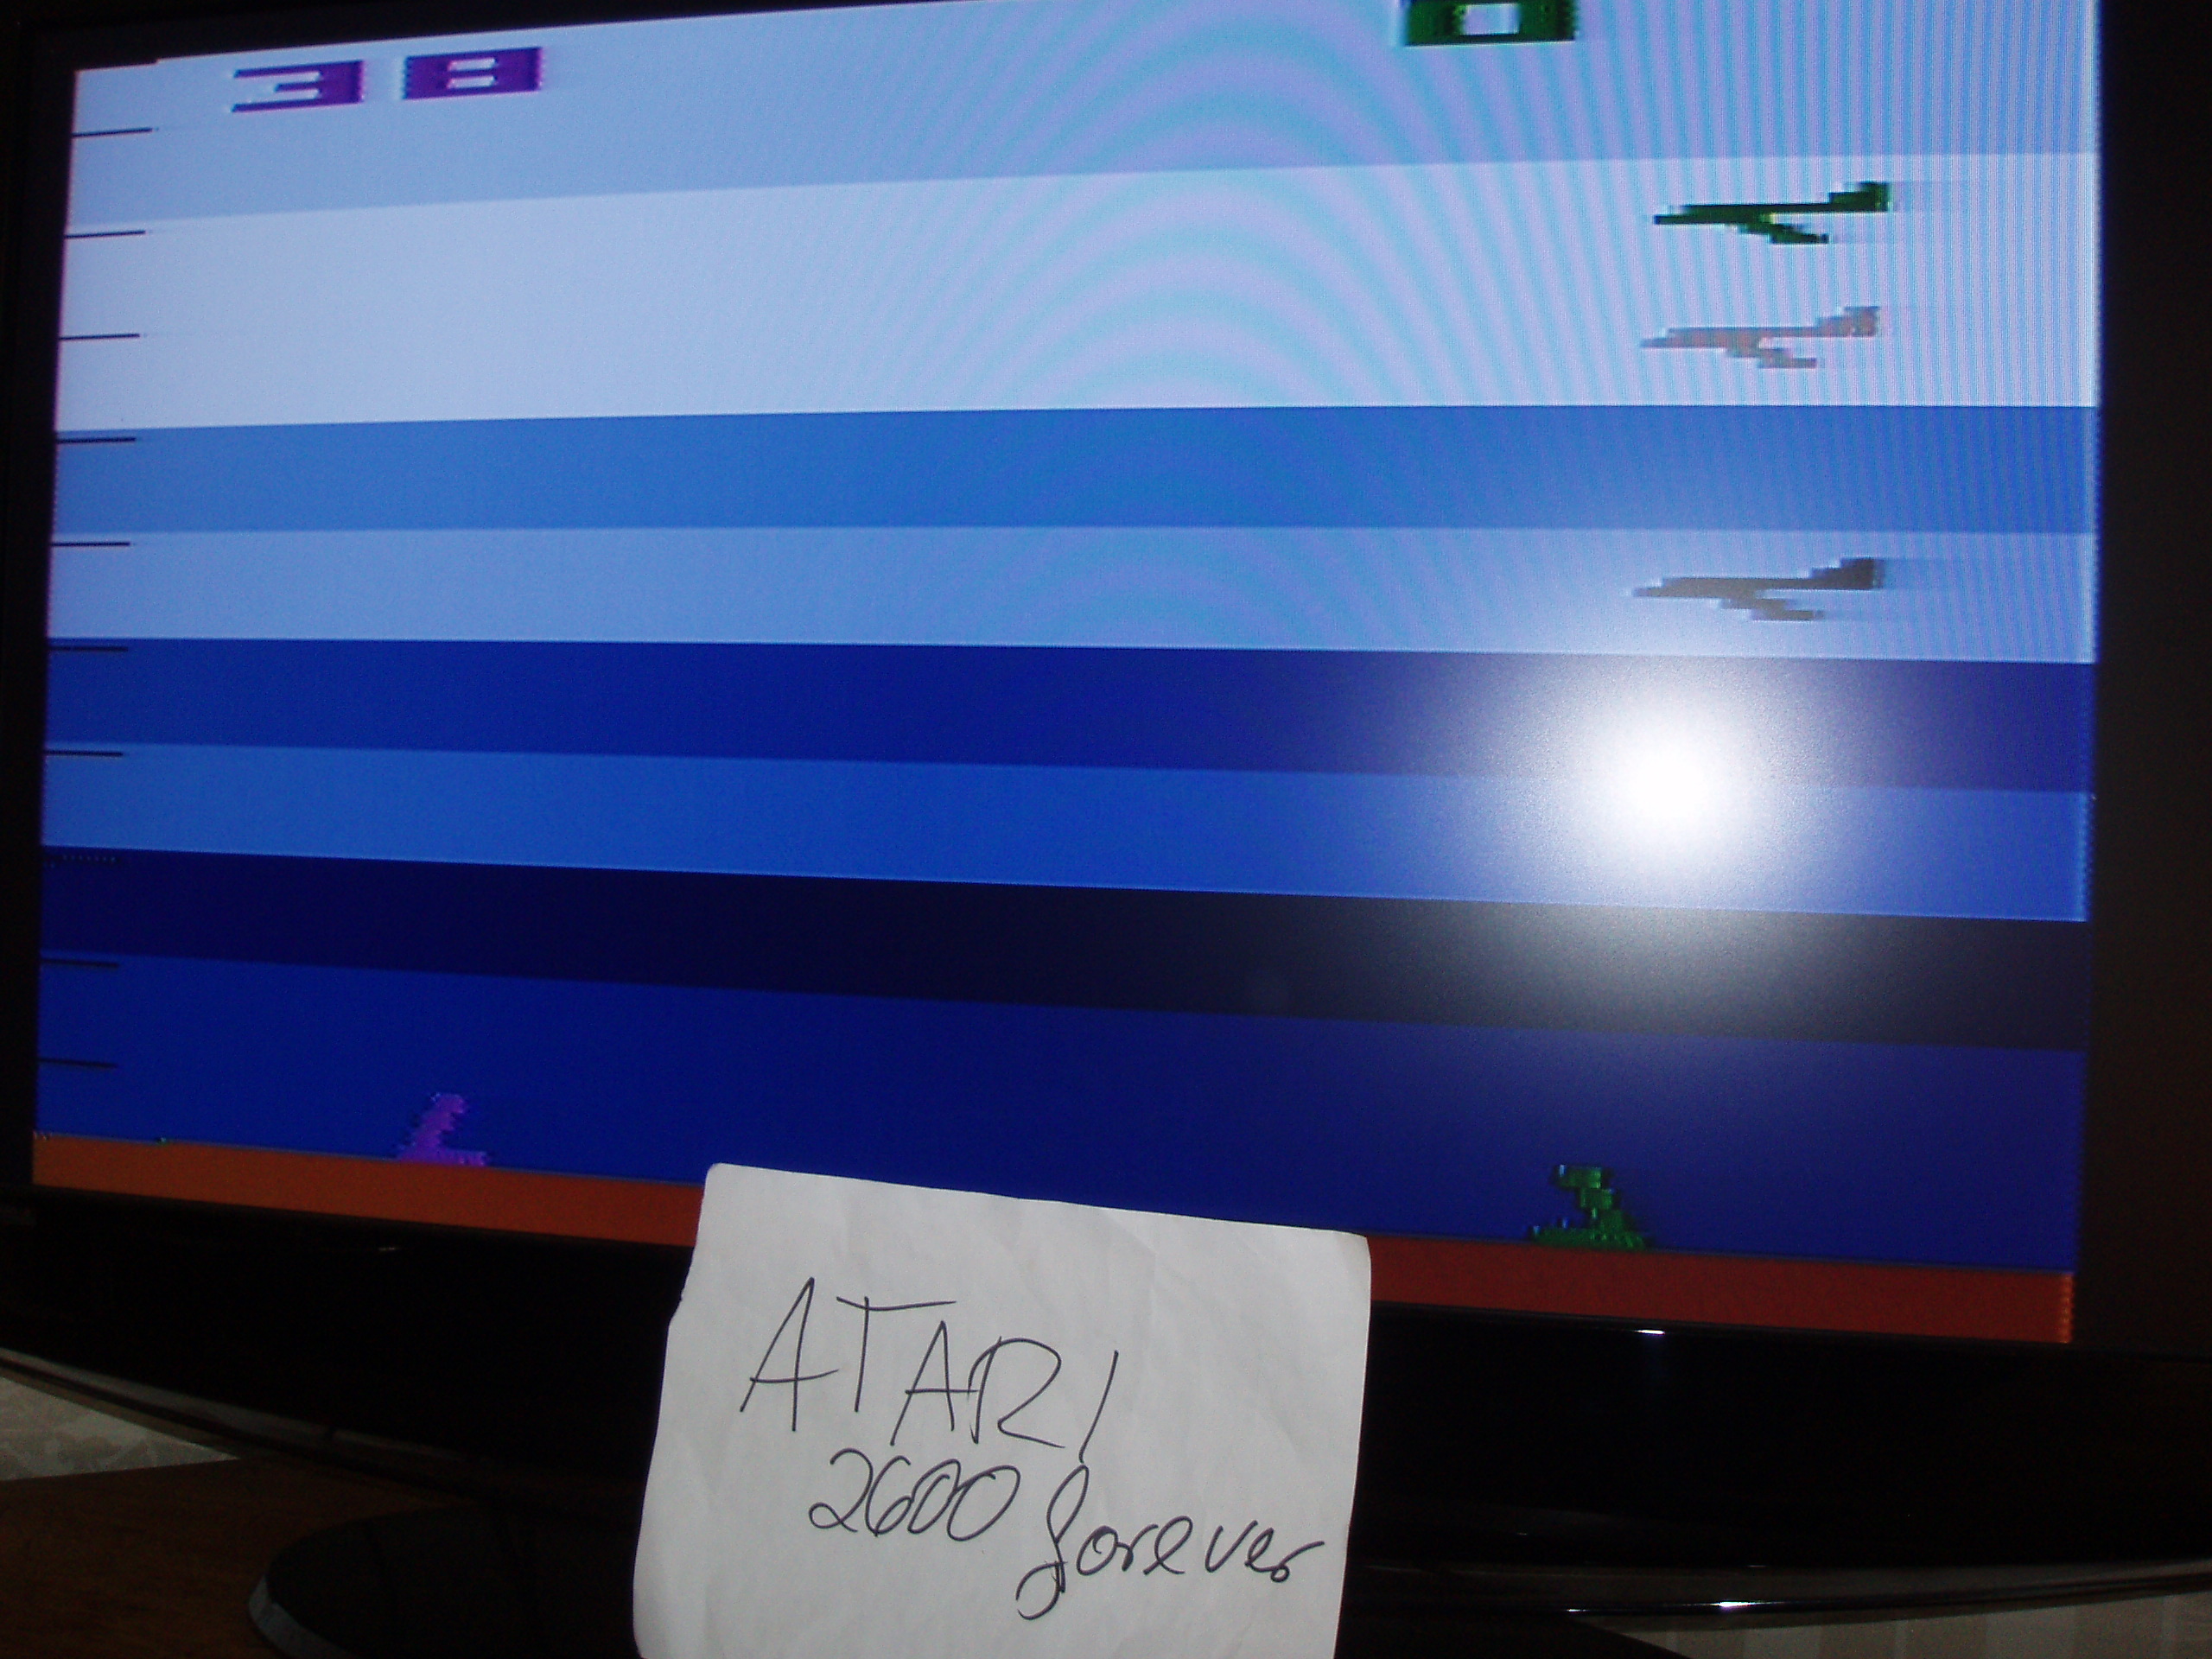 atari2600forever: Air-Sea Battle (Atari 2600 Novice/B) 38 points on 2018-09-10 02:25:55